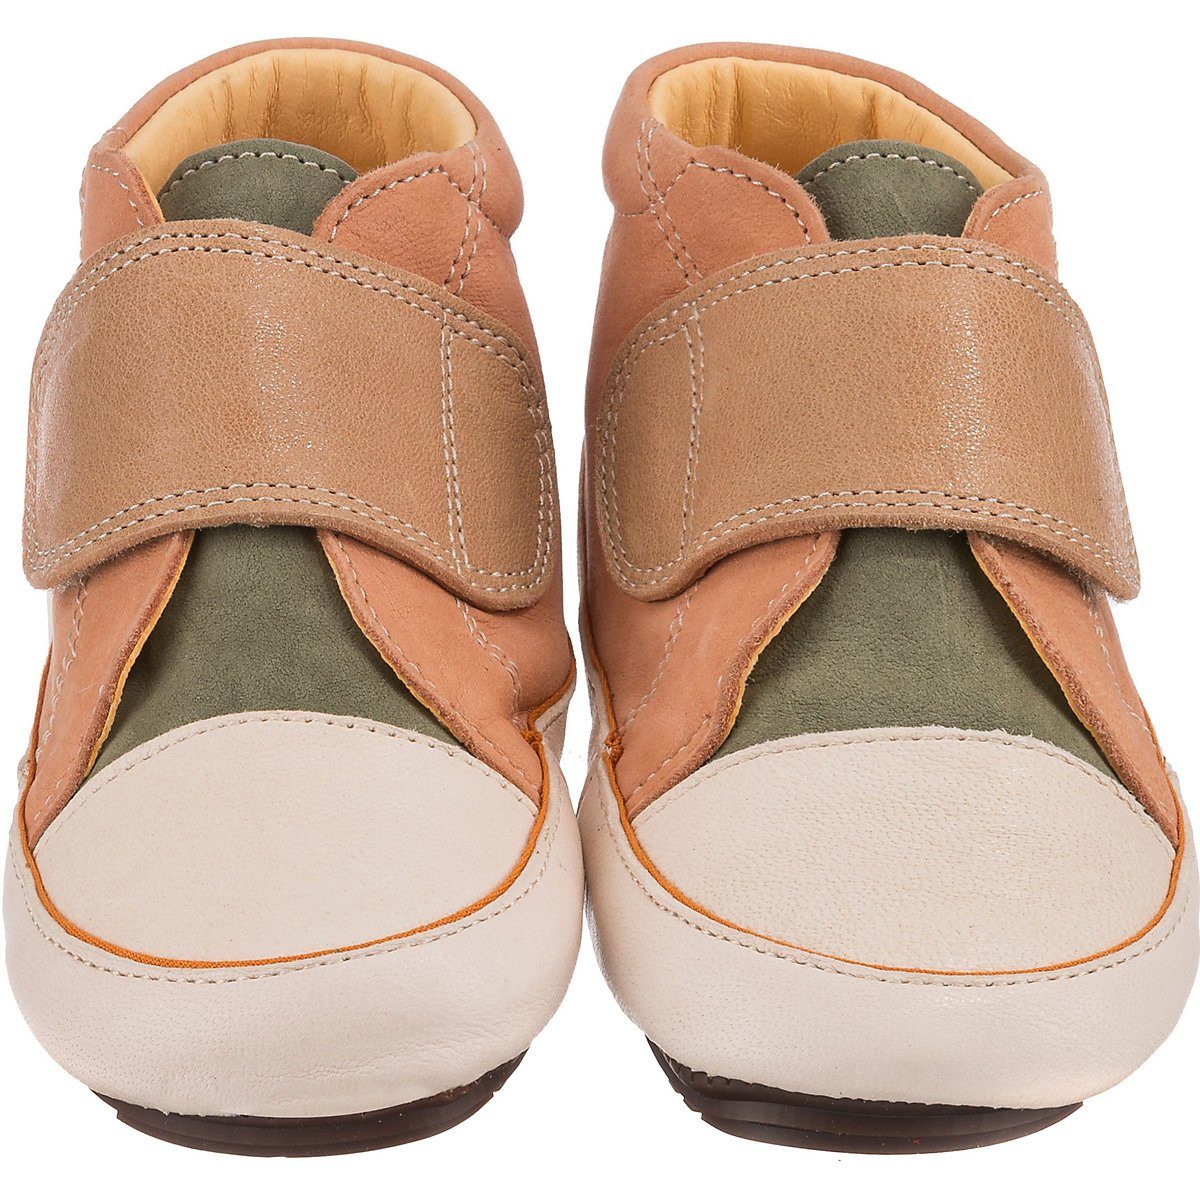 Schuhe Babyschuhe Mädchen DULIS Baby Sneakers High Lauflernschuh